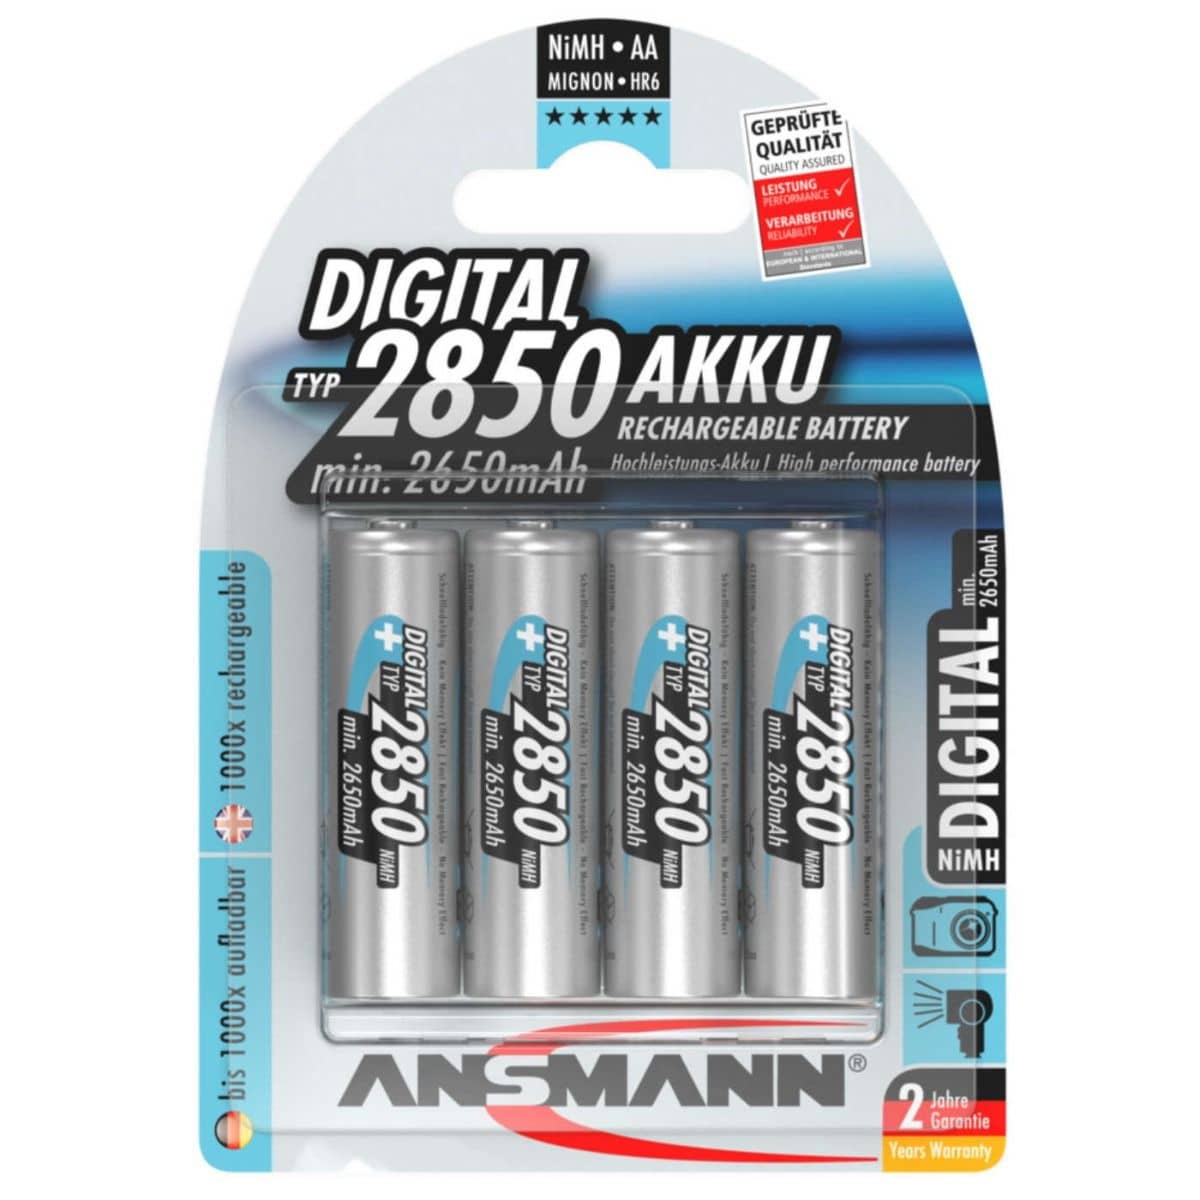 Ansmann Rechargeable Batteries AA 2850mAh NIMH x4  -  ANS2850AA-B4